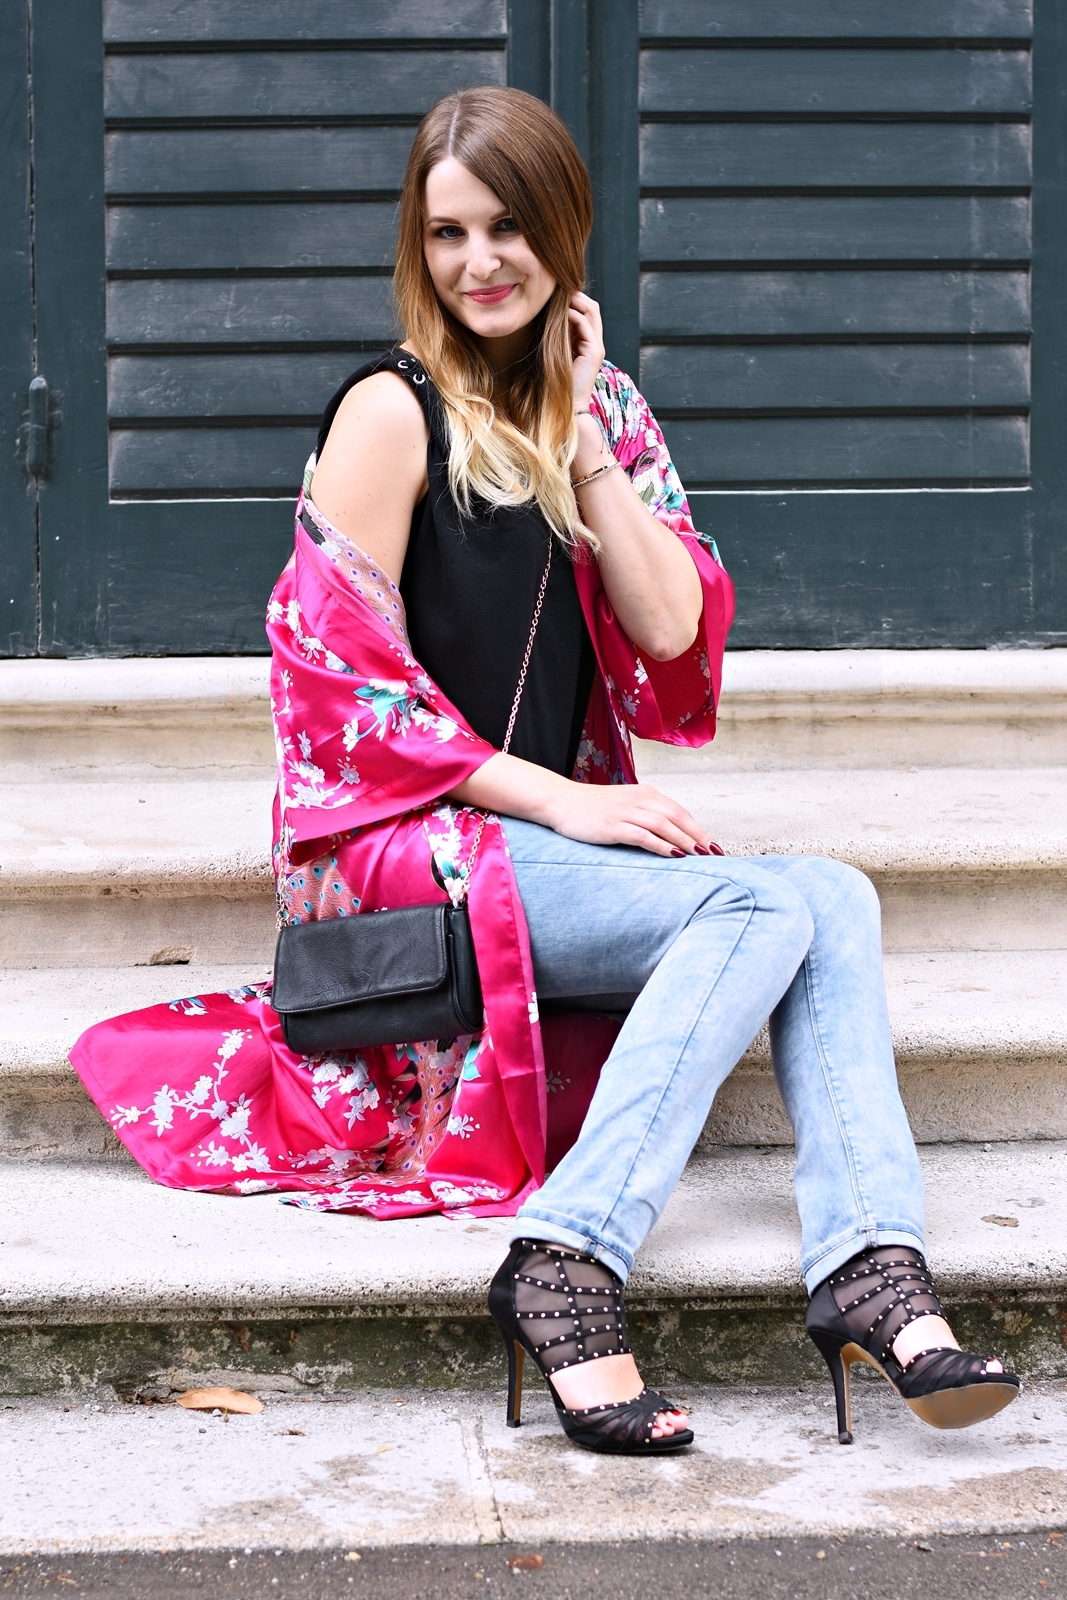 Der Kimono Trend - Summer Colors - sommerliche Farben - Streetstyle - Mode - Fashion - High Heels - Fashionladyloves by Tamara Wagner - Fashionblog